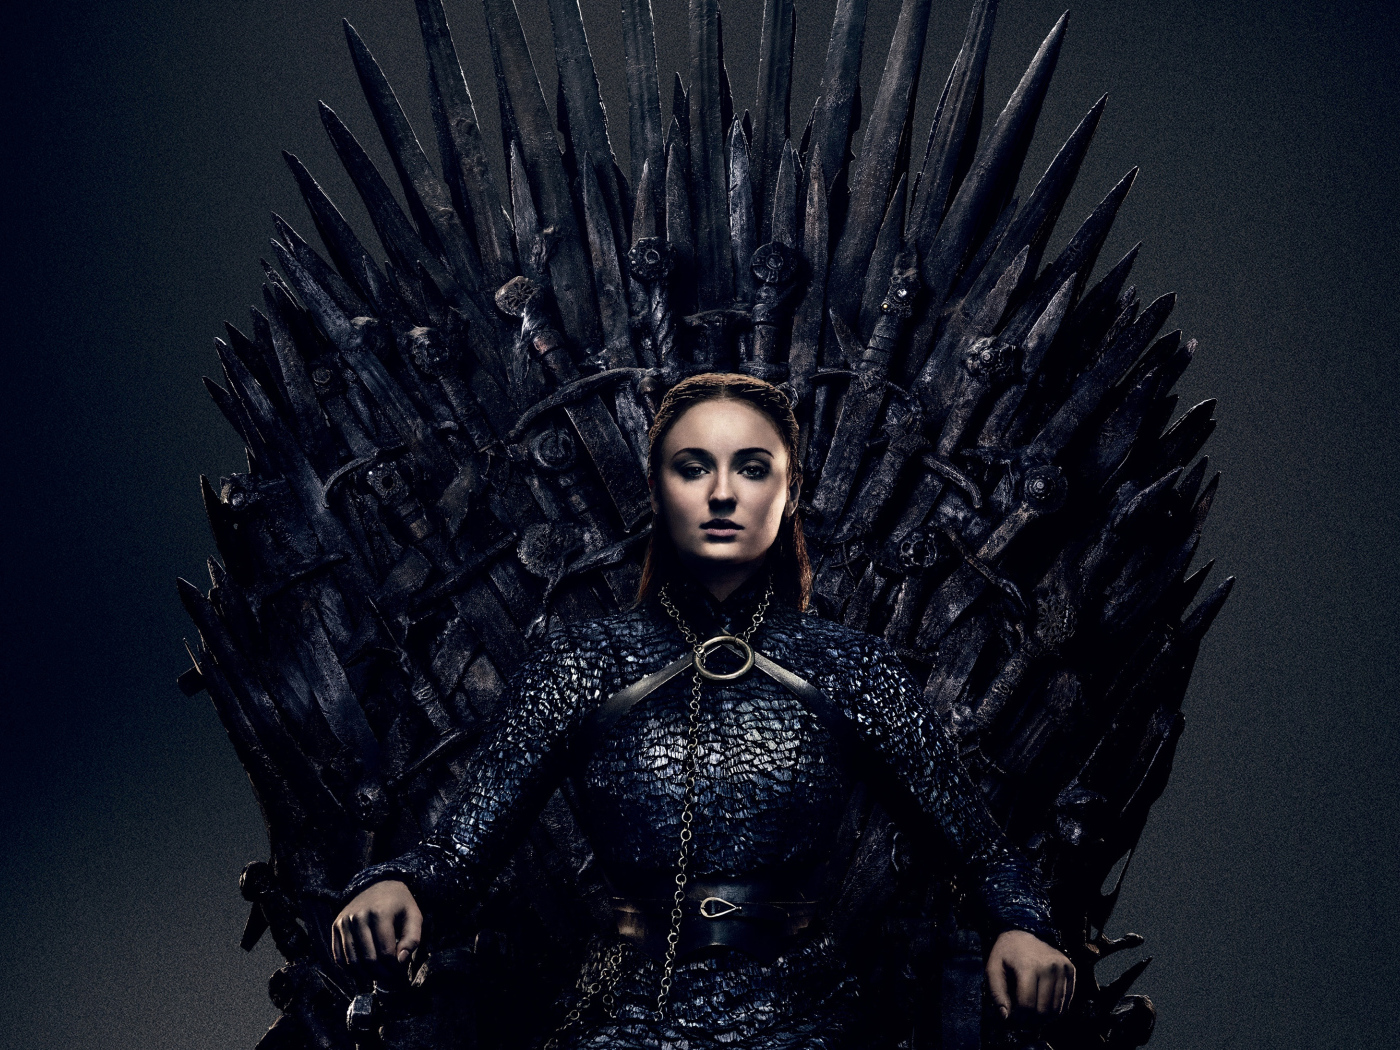 Sansa Stark character on the throne film Game of Thrones Season 8